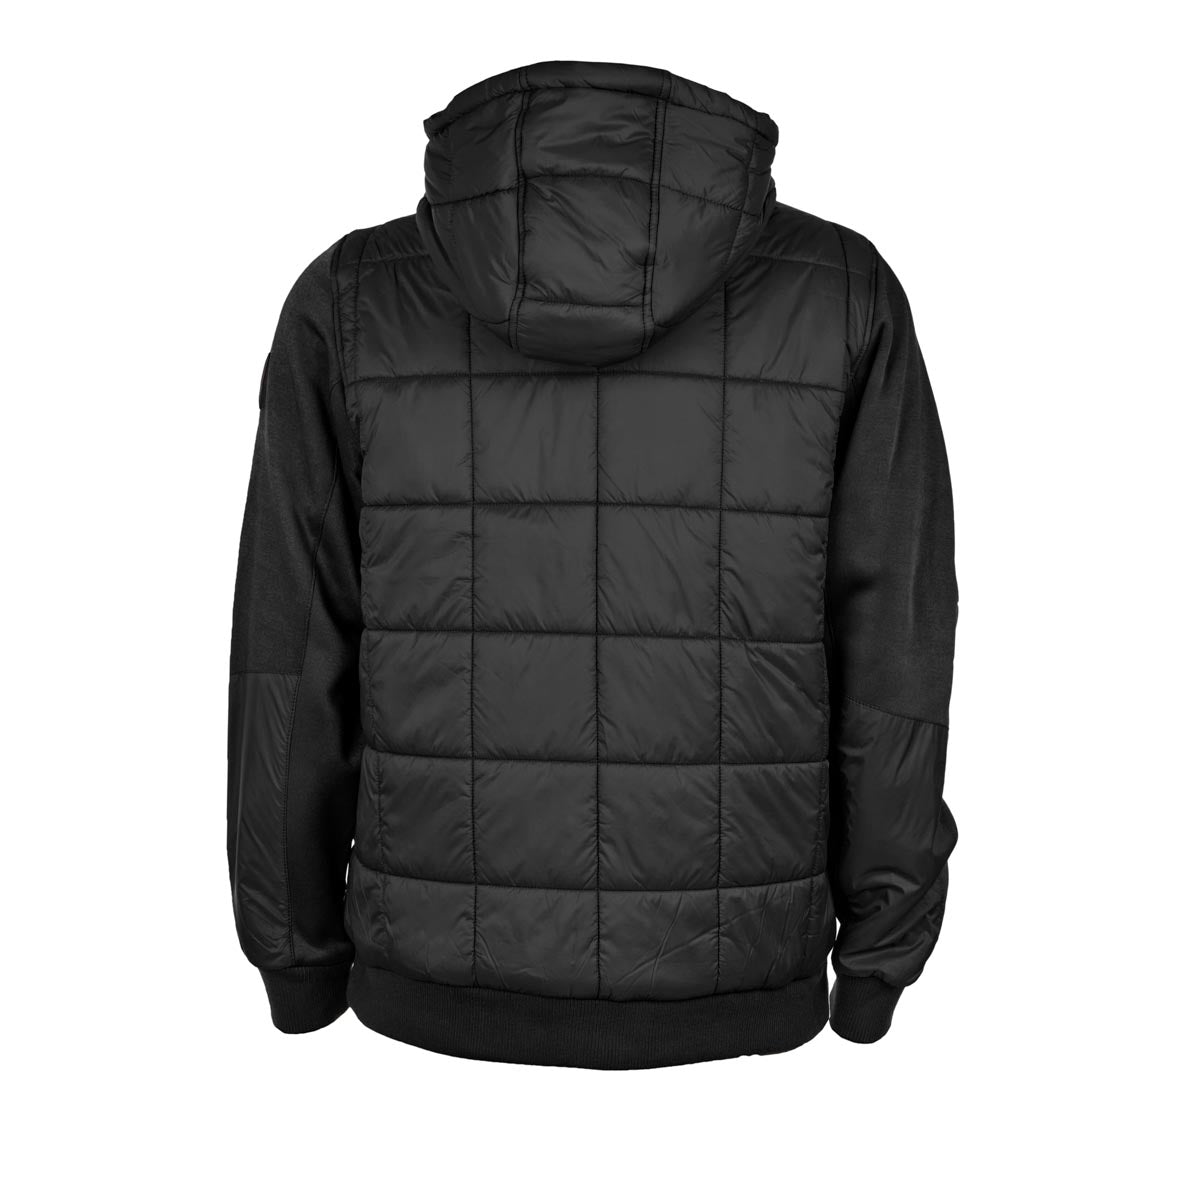 Reebok Men's Mixed Media Jacket with Tricot Sleeve – PROOZY